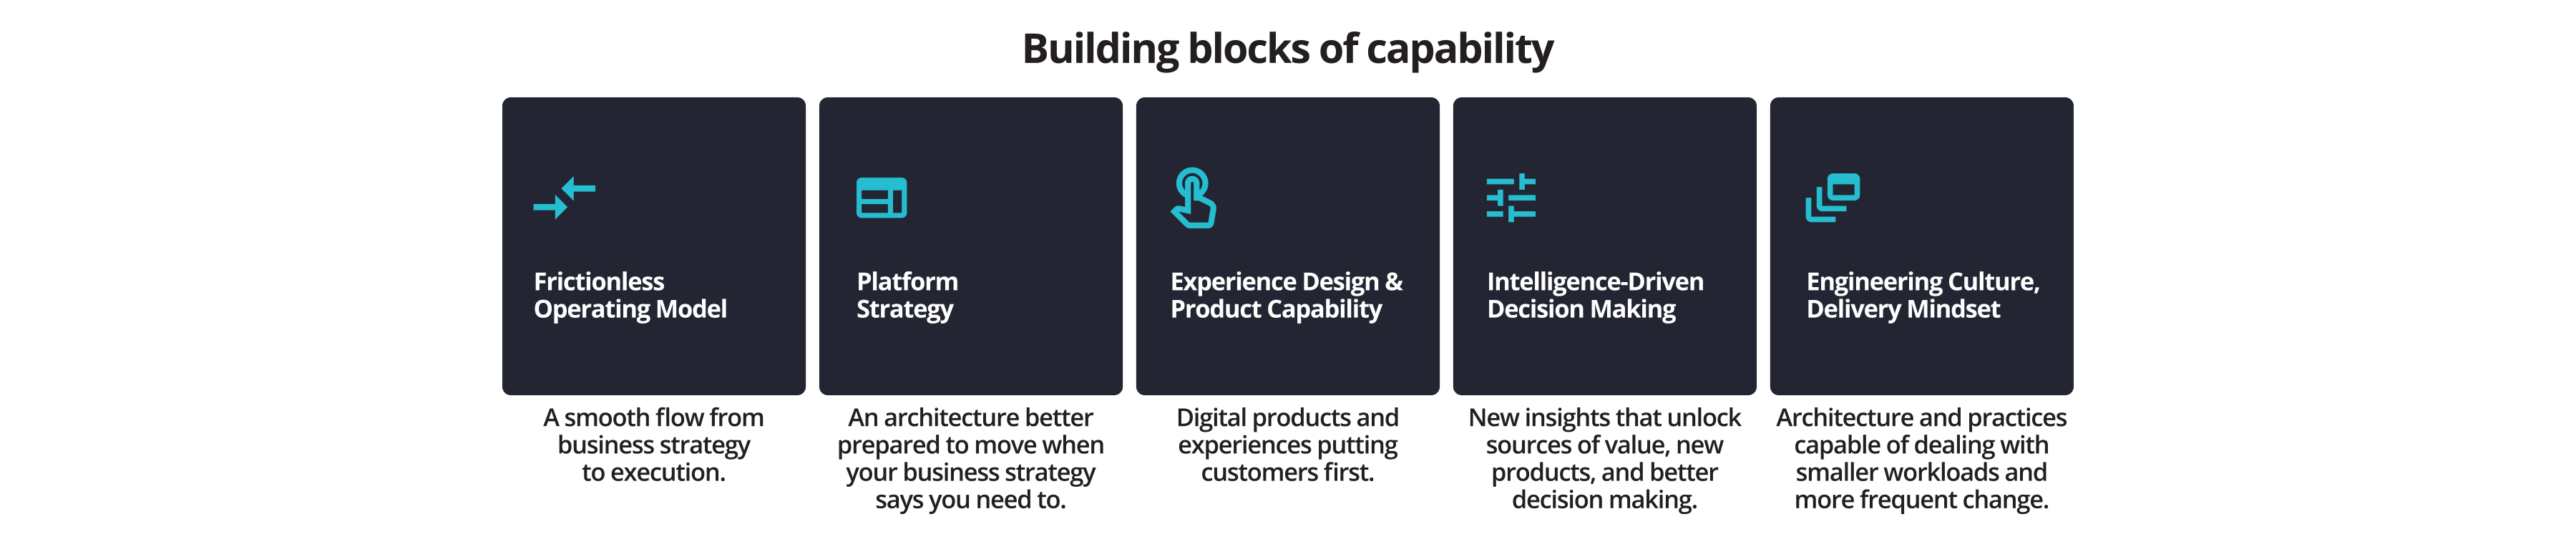 Building blocks of capability